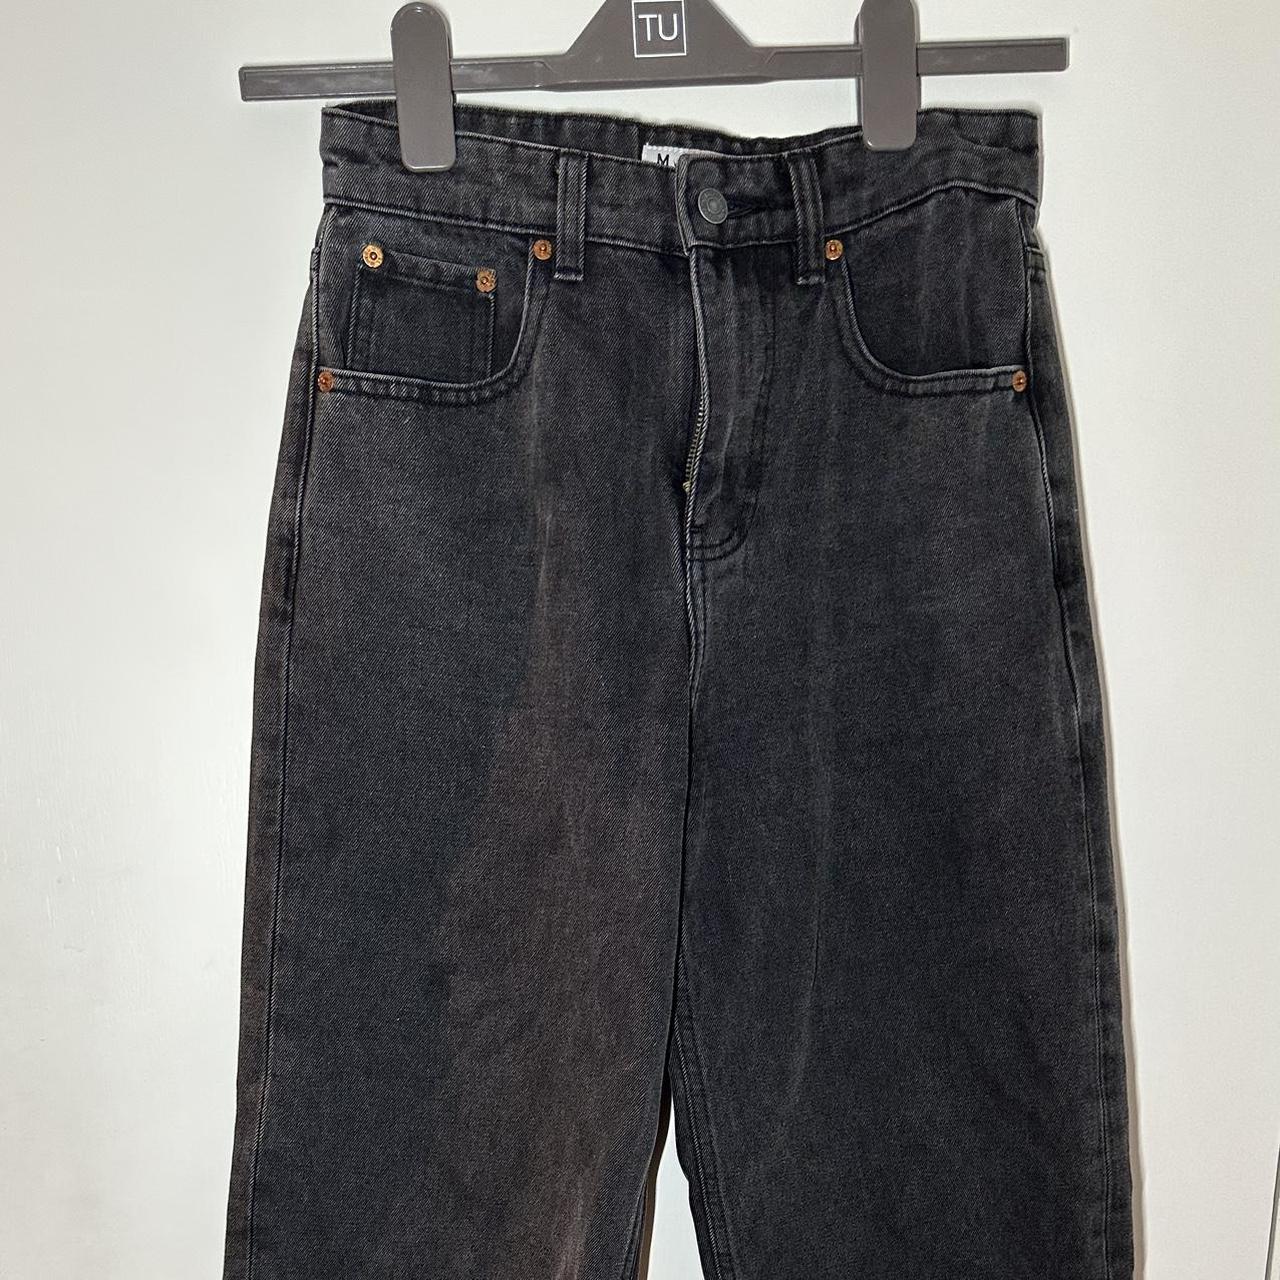 Black wide leg jeans MOTEL ROCKS High- waisted Baggy... - Depop